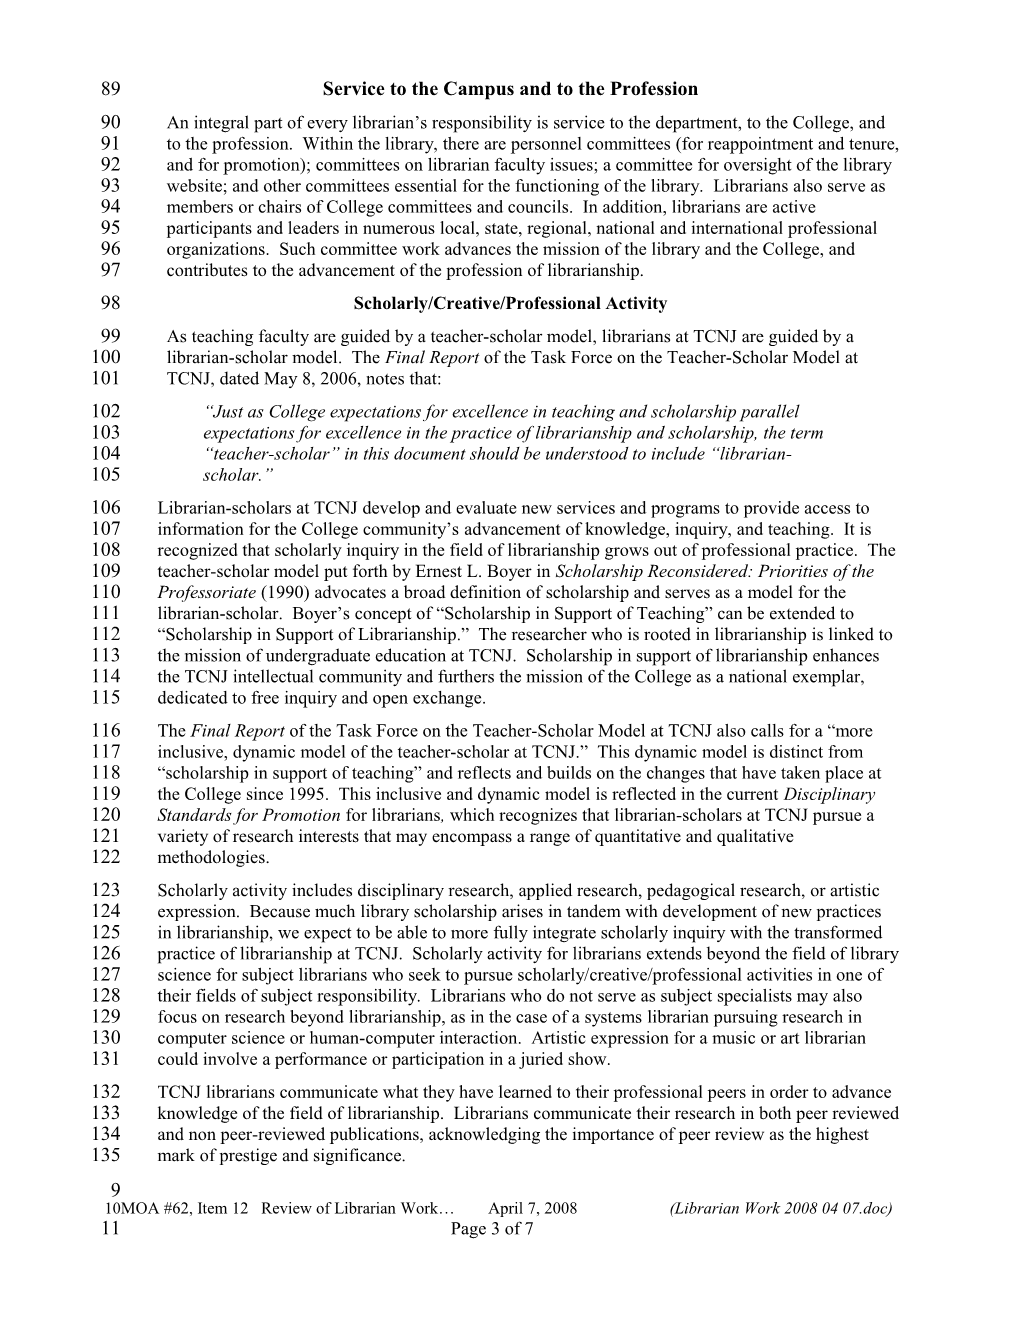 Revision of Item 12, Memorandum of Agreement #62